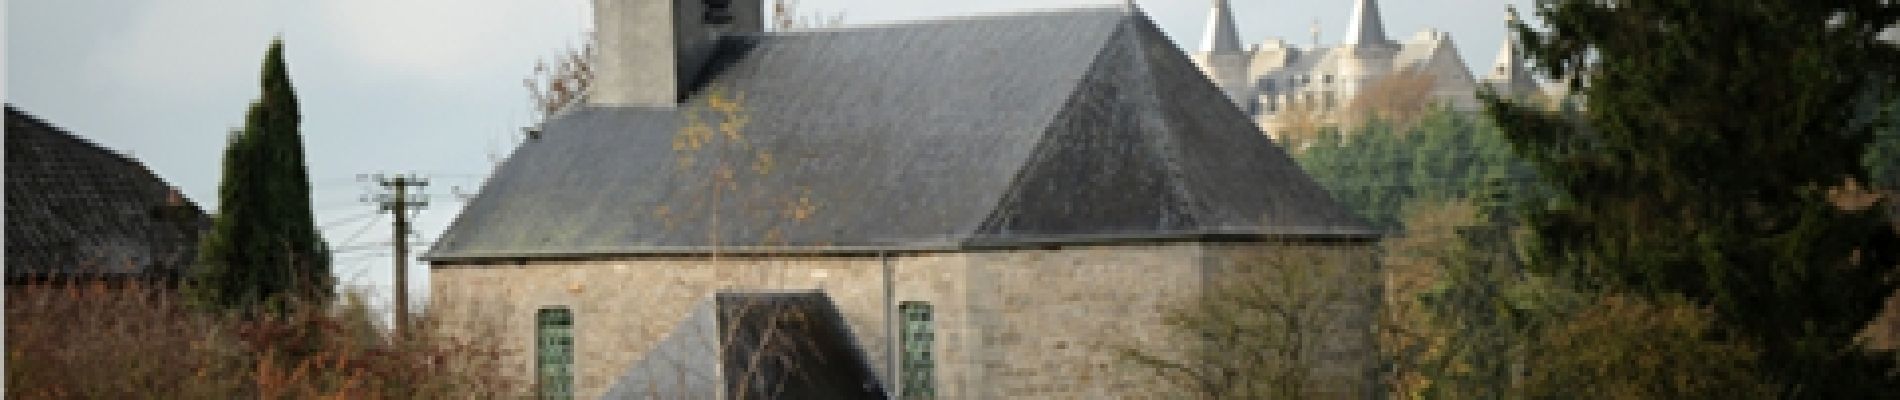 POI Rochefort - Jamblinne Chapel - Photo